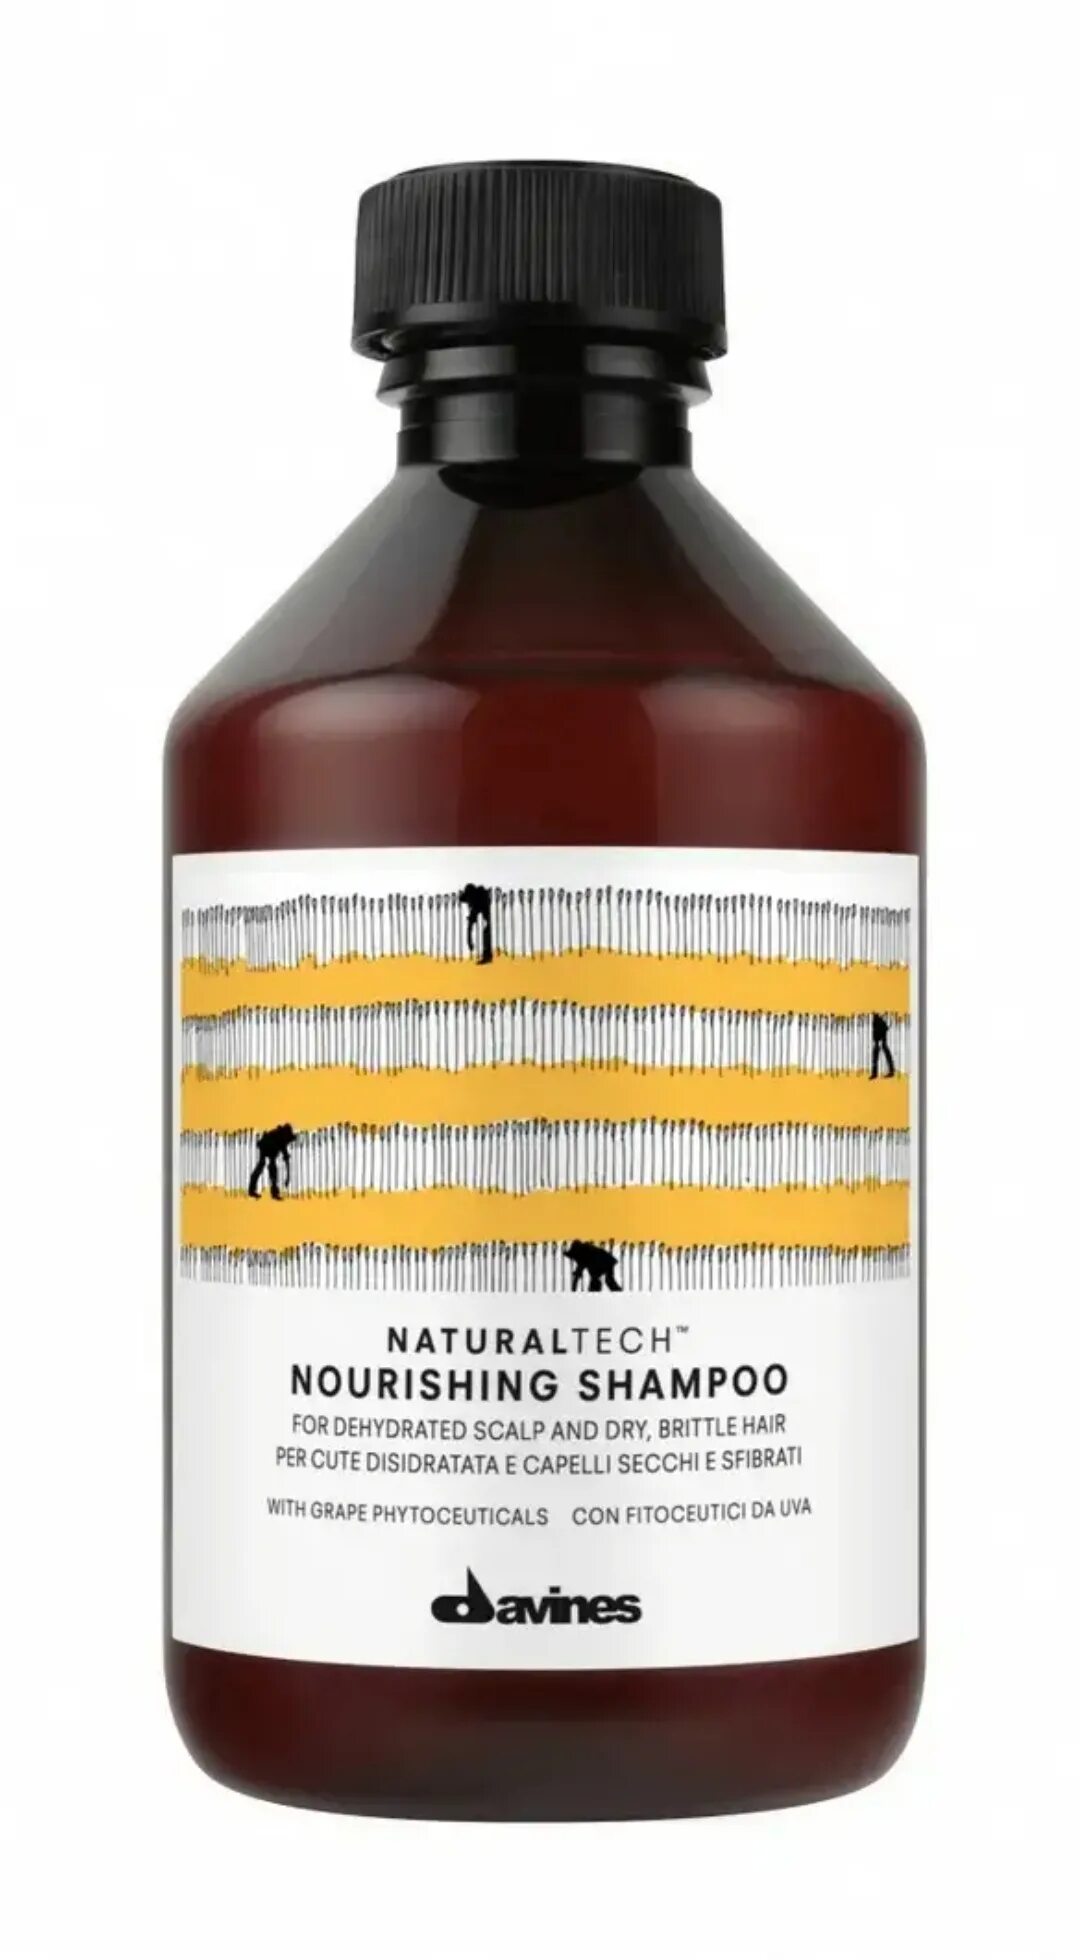 Davines для волос купить. Nourishing шампунь Давинес. Davines natural Tech Calming Shampoo. Davines уплотняющий шампунь для волос Replumping Shampoo. Rebalancing Shampoo - балансирующий шампунь Davines.